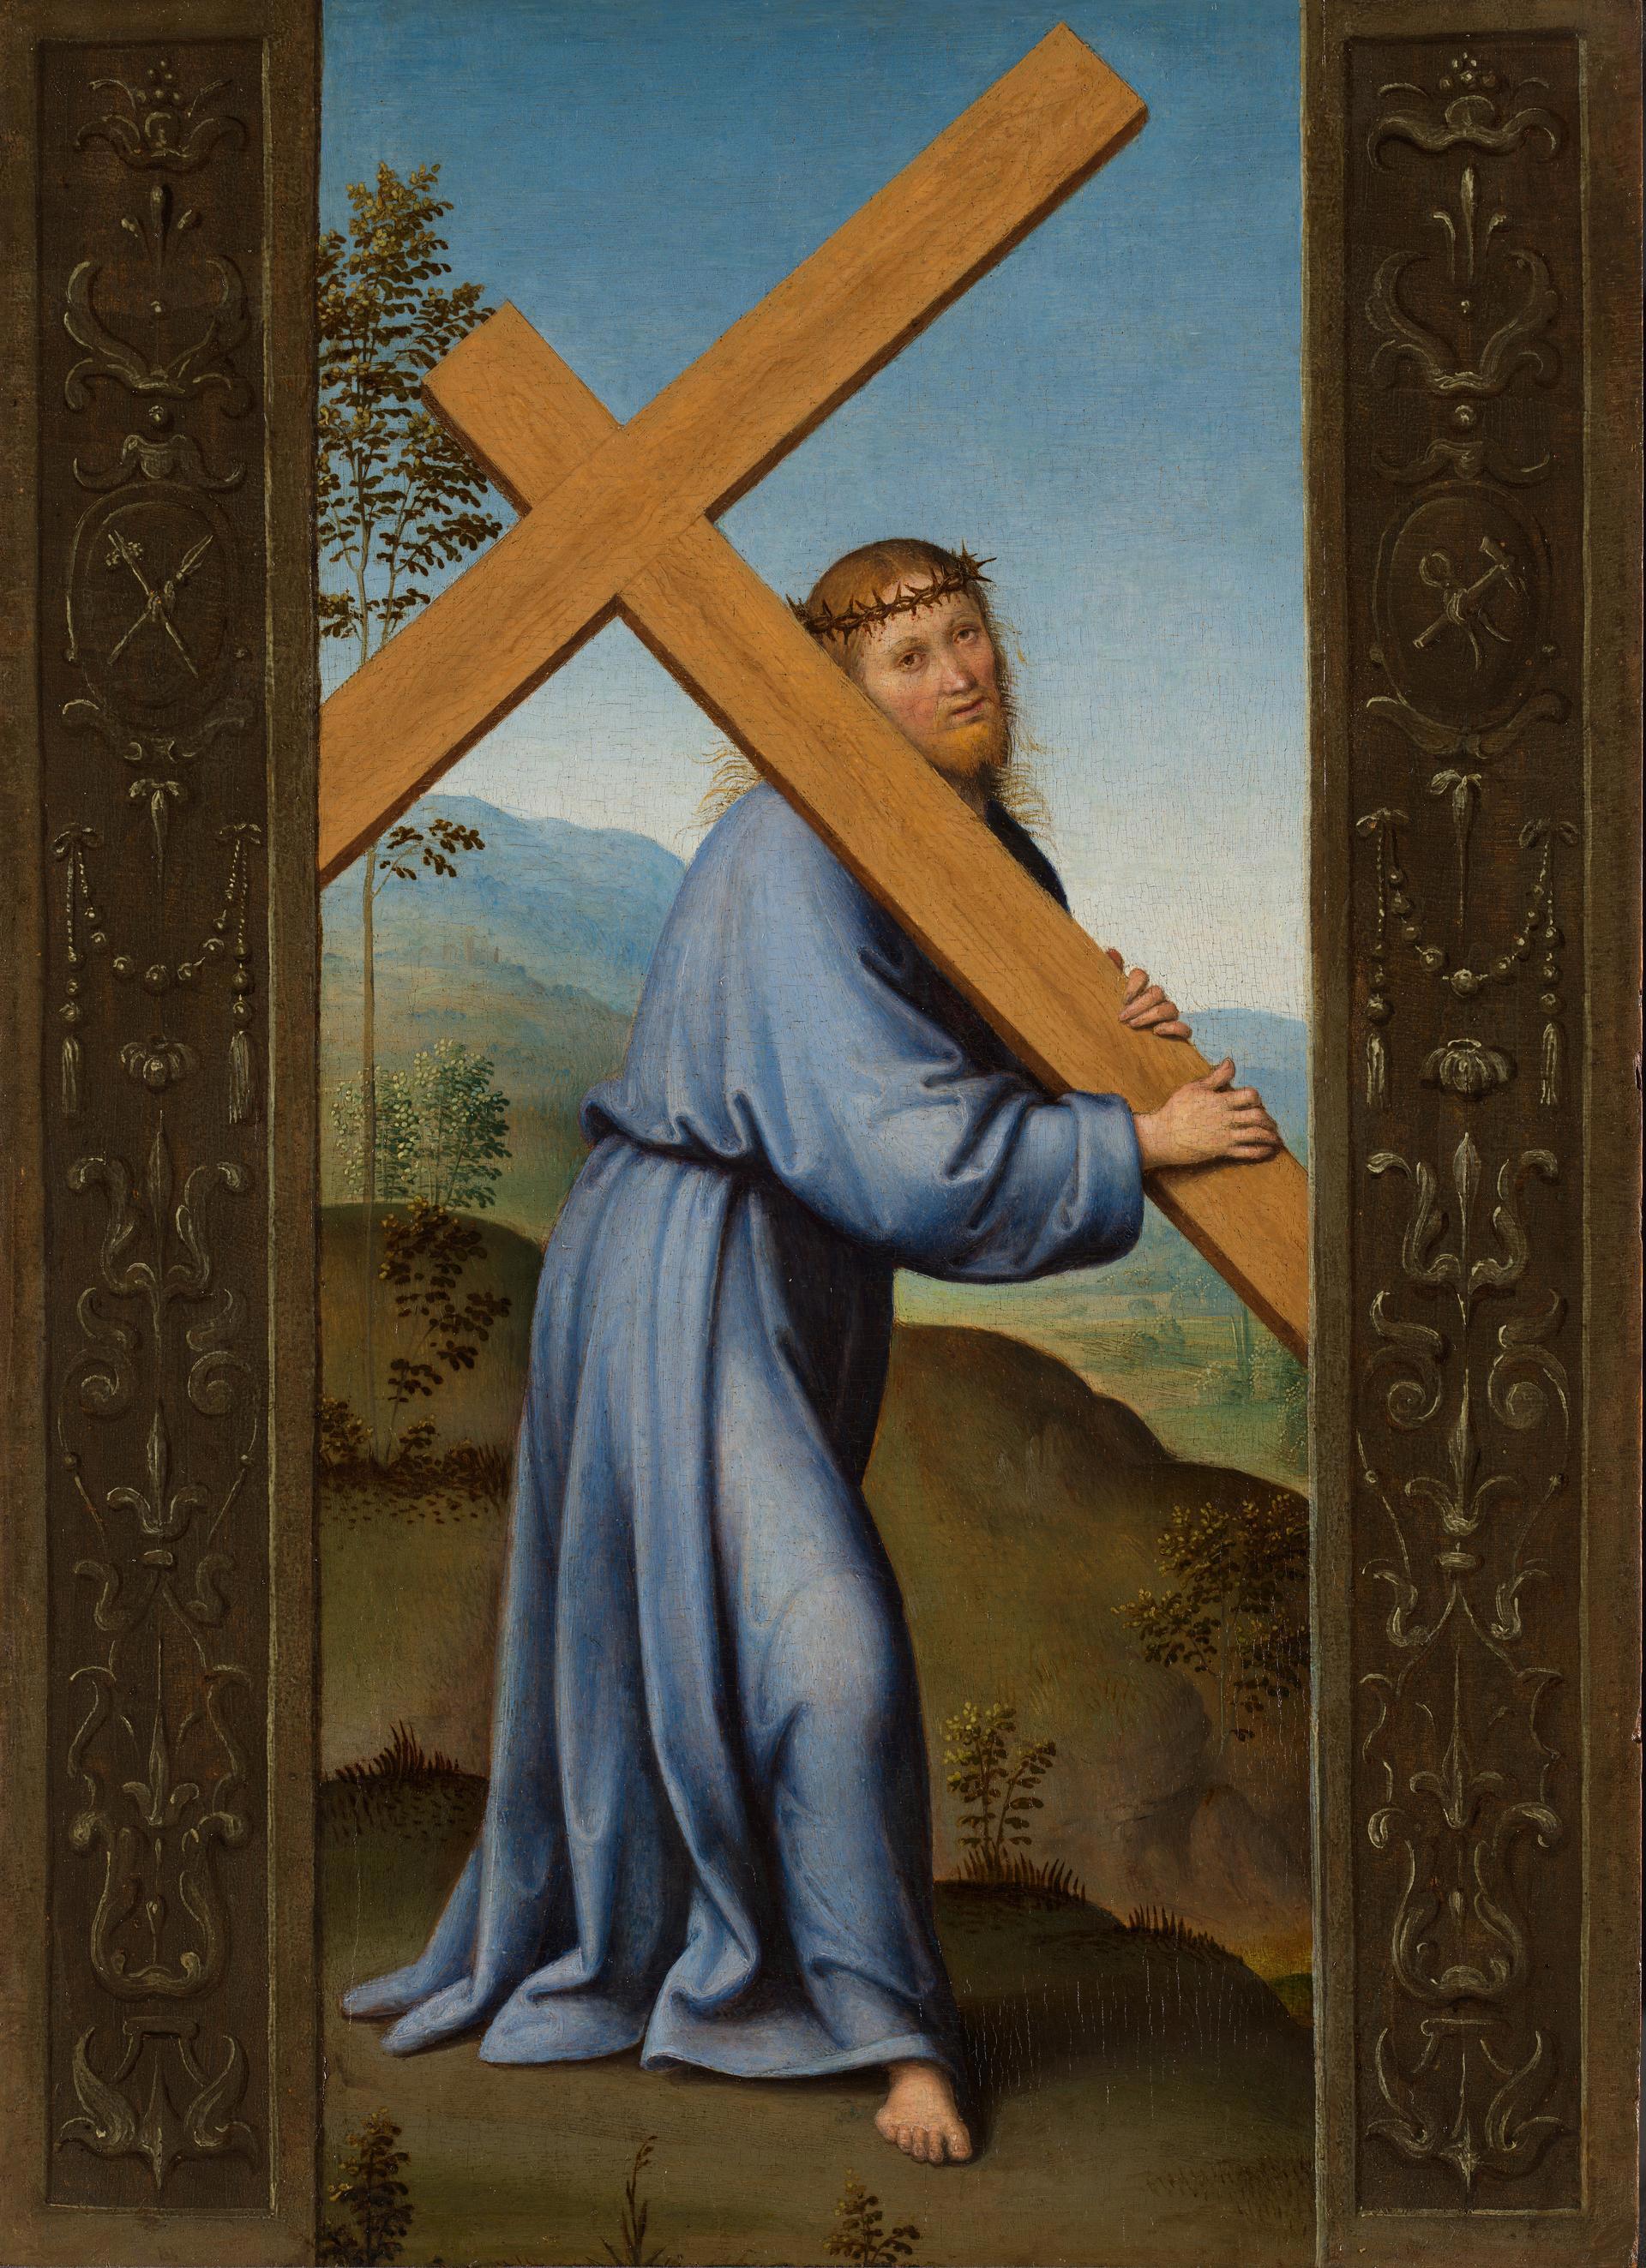 jesus on the cross paintings